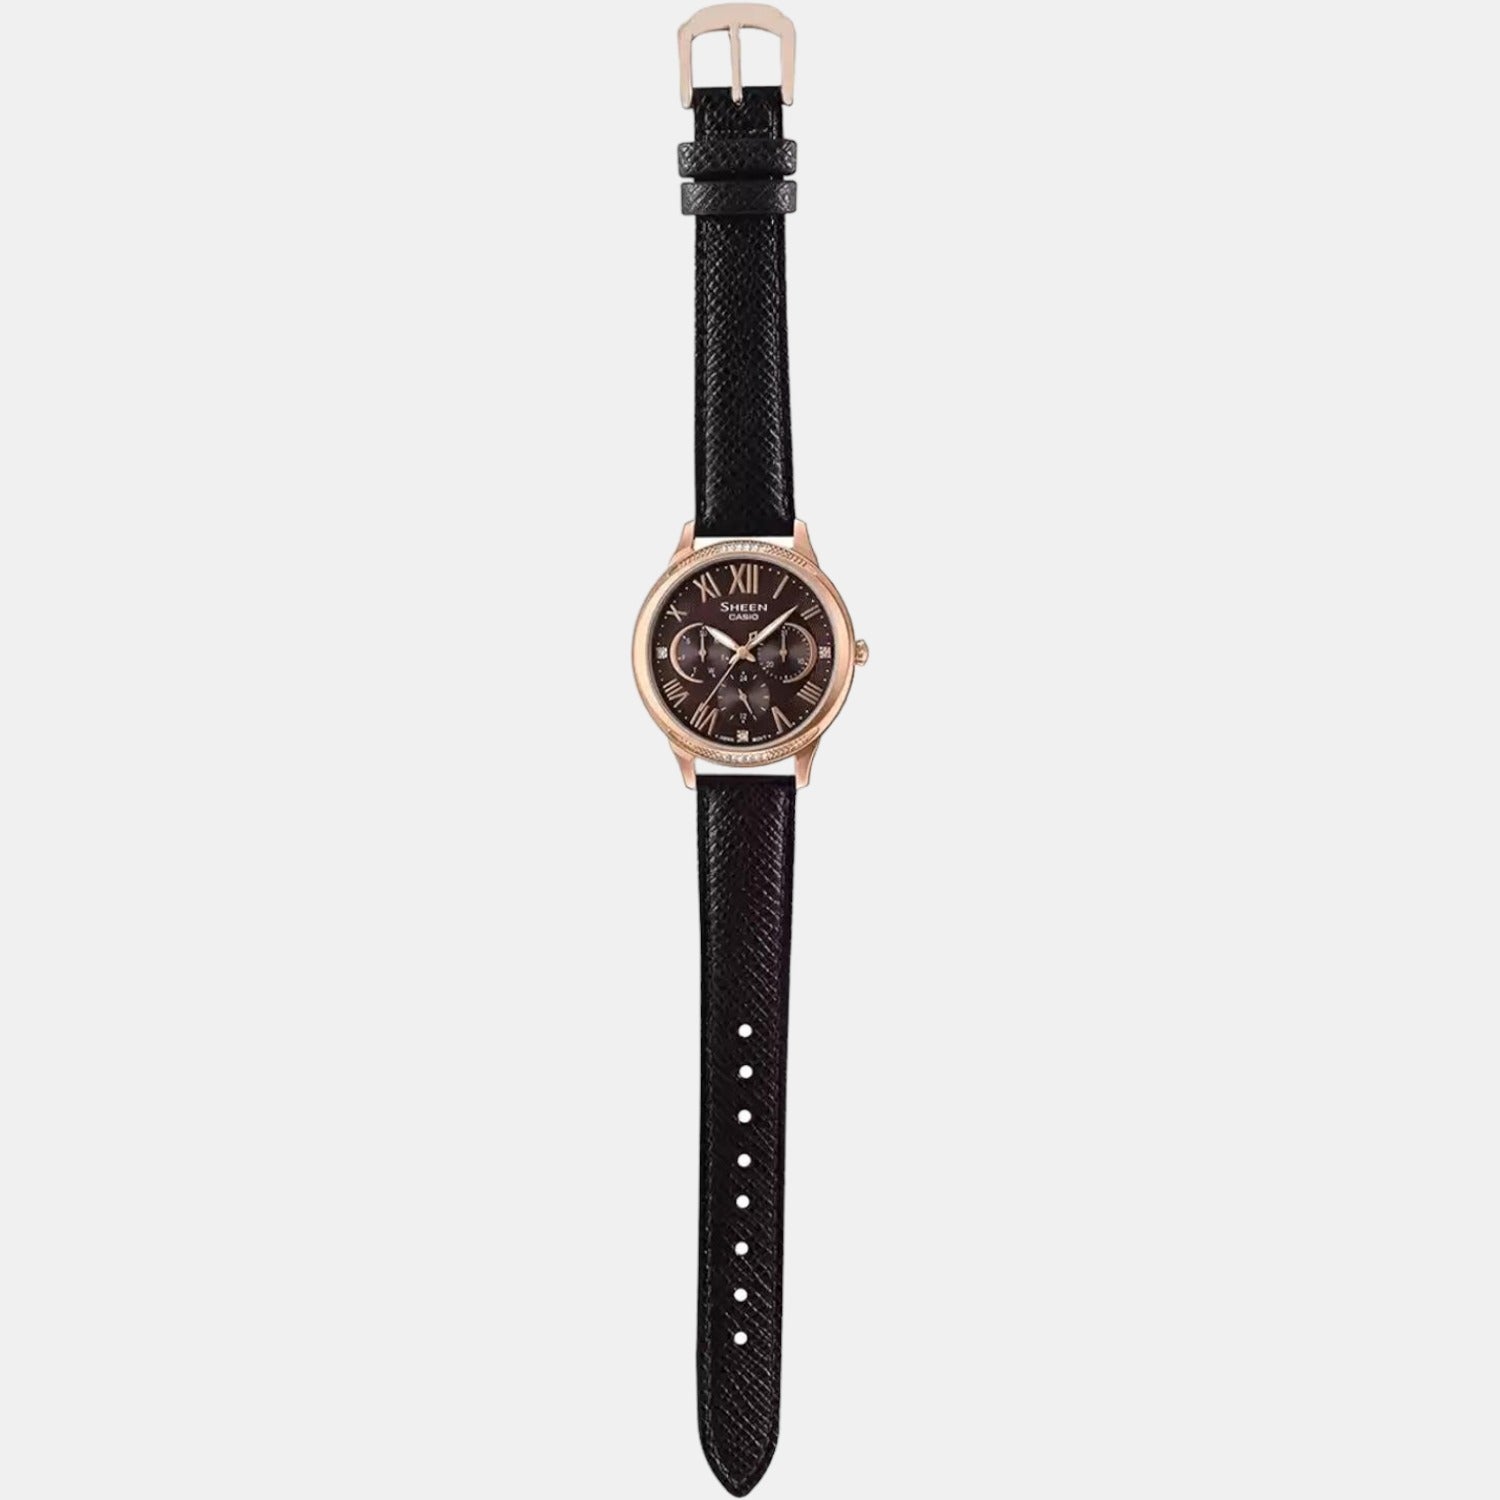 casio-stainless-steel-brown-analog-womens-watch-watch-sx202